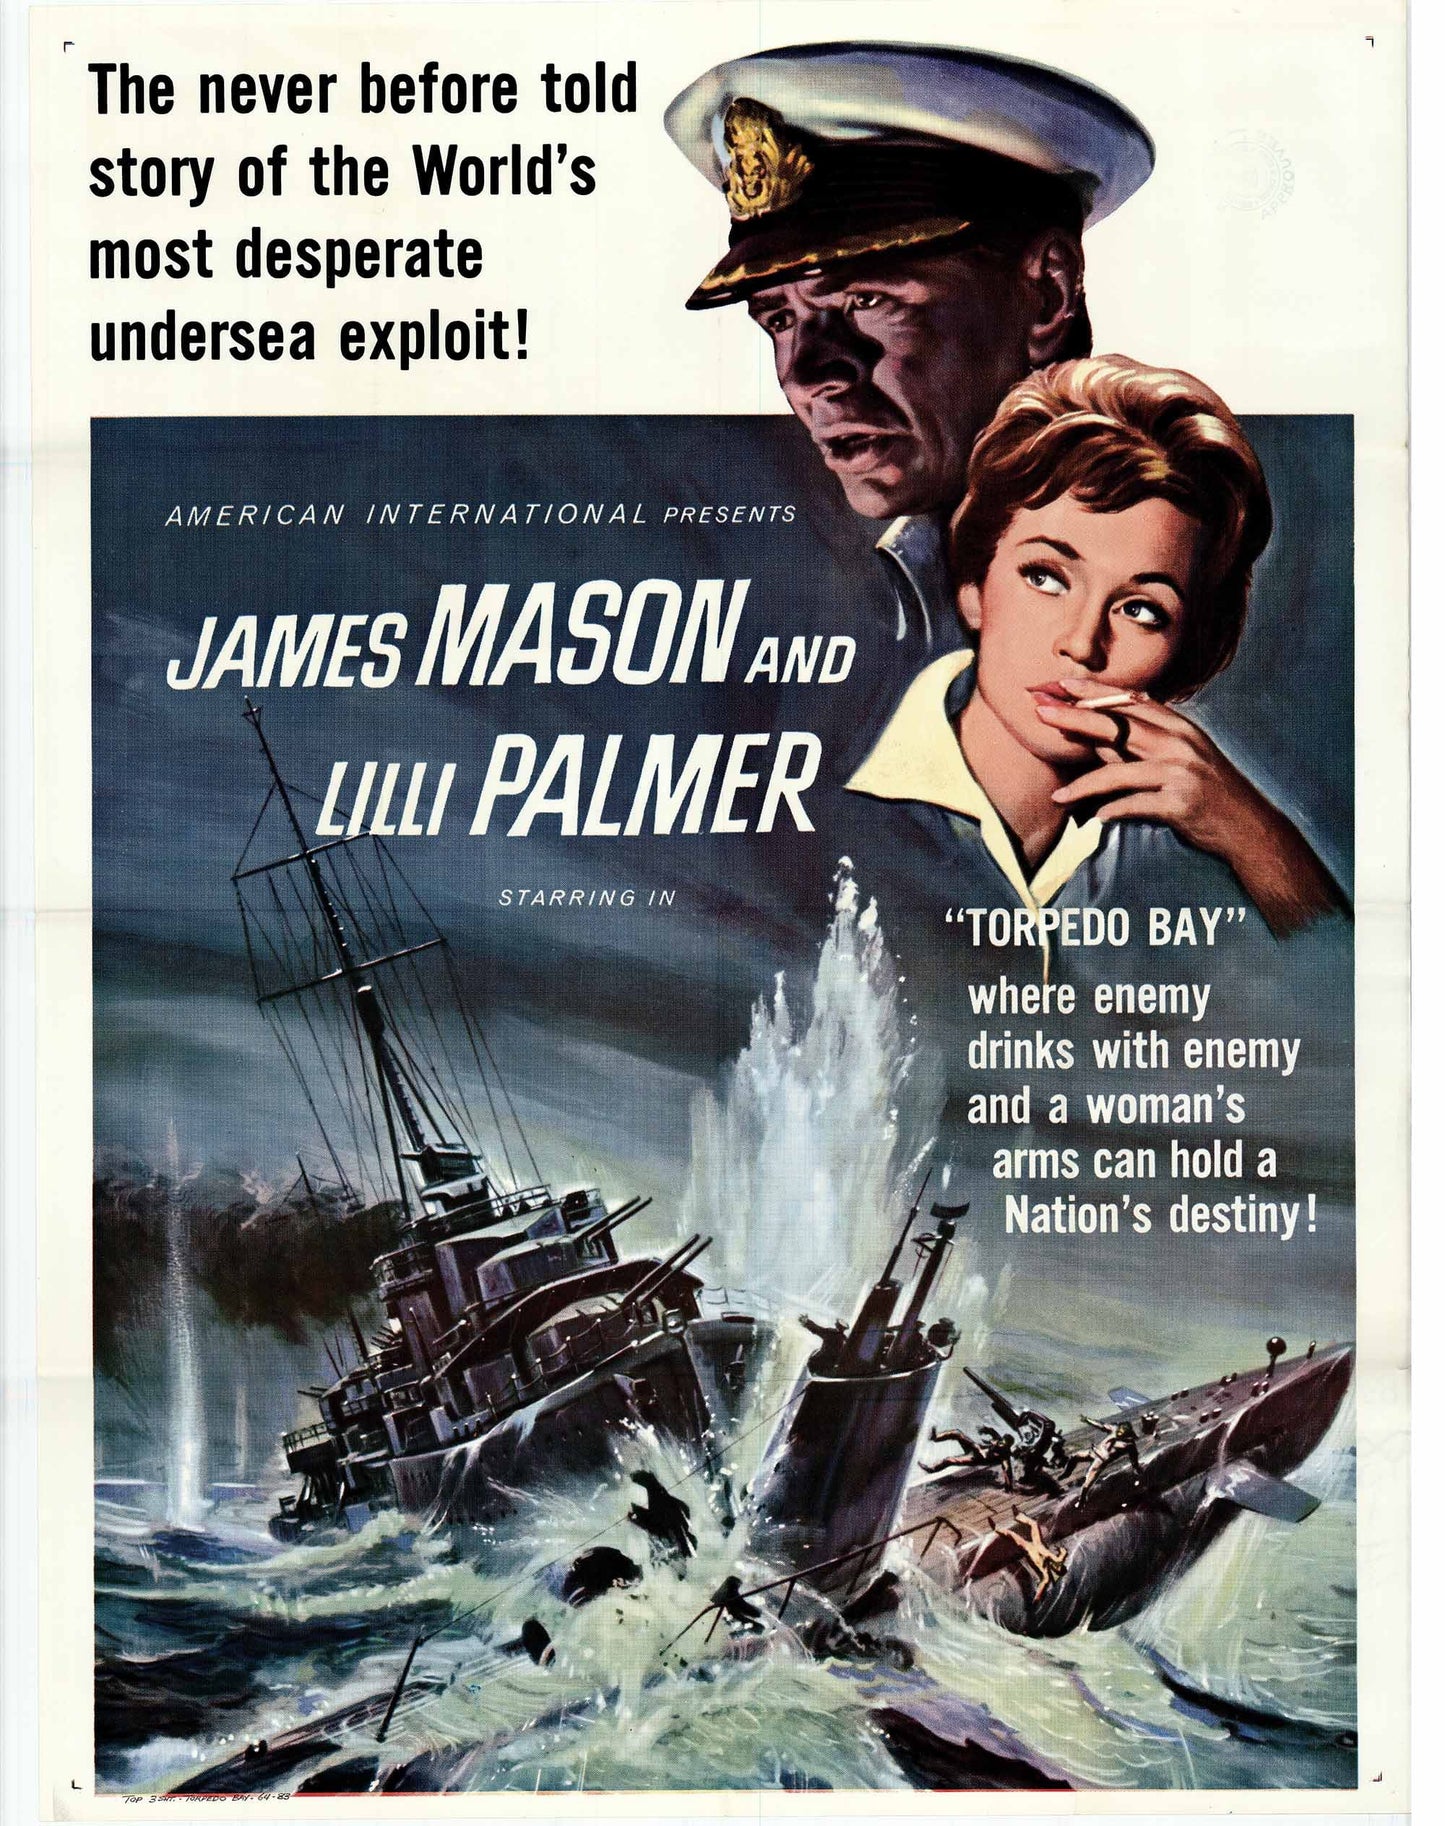 Torpedo Bay - Classic 2 Panel Movie Poster